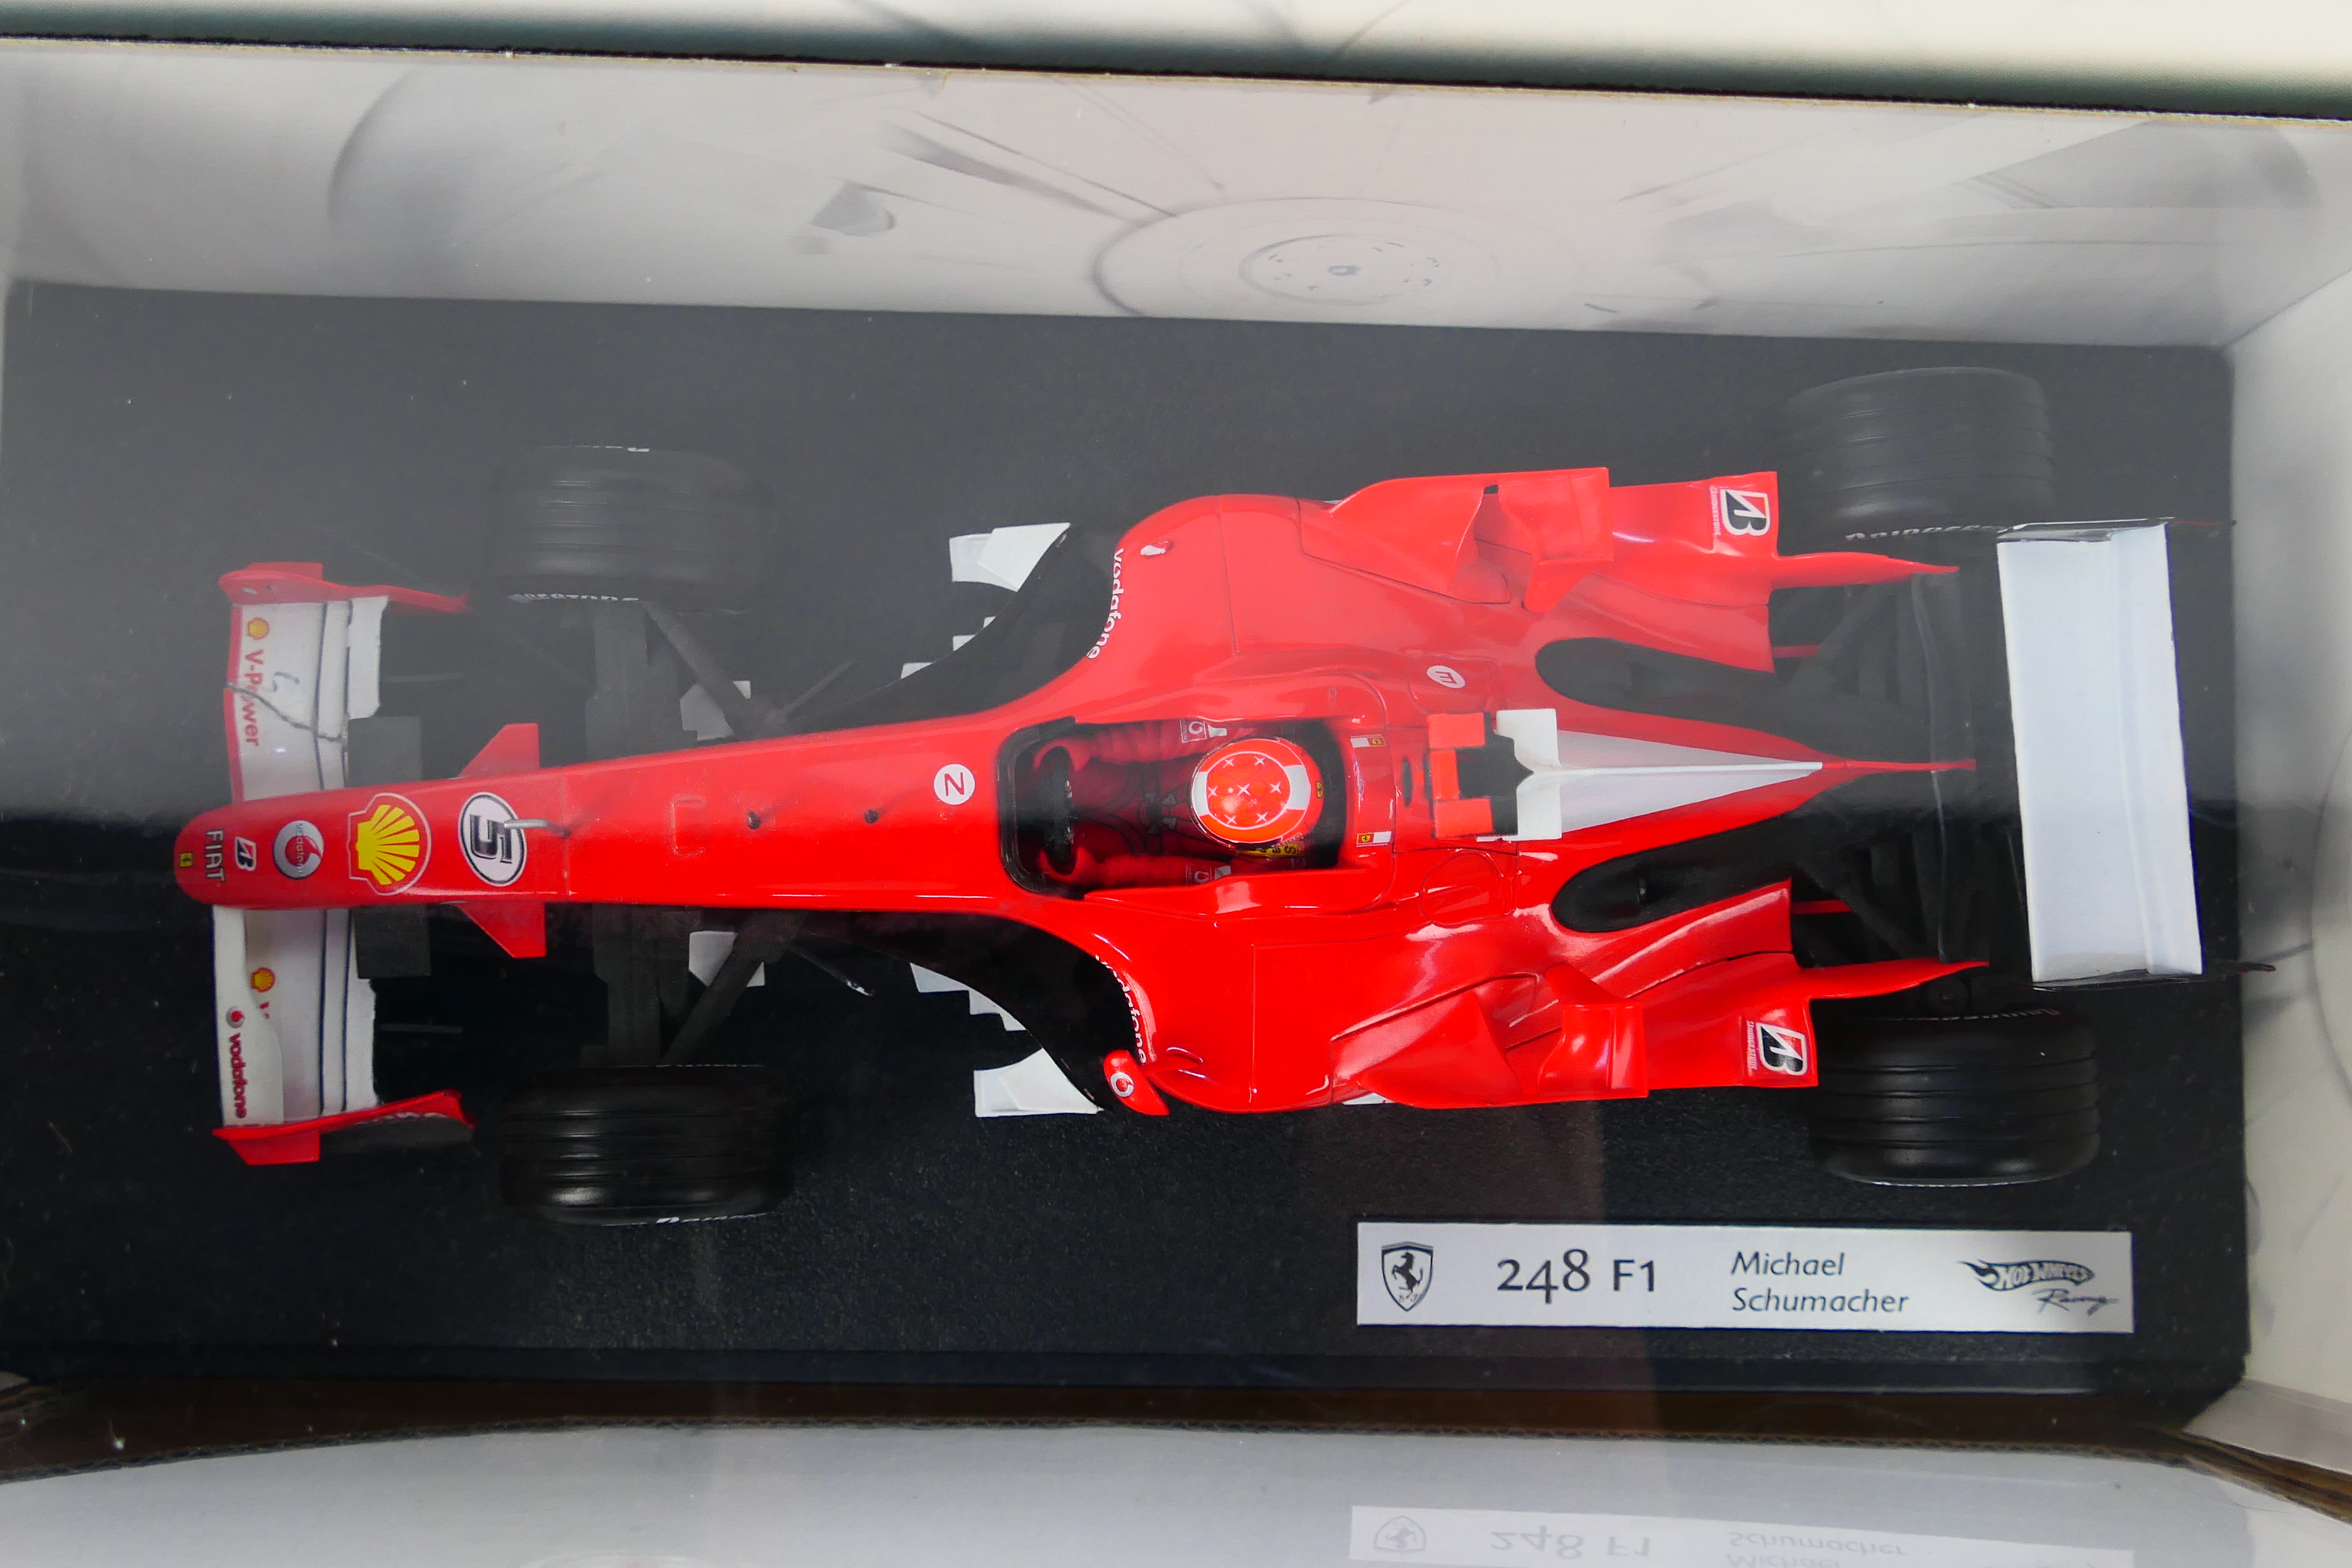 Hot Wheels - A boxed 1:18 scale Hot Wheels 'Racing' J2980 Ferrari 248 F1 diecast racing car. - Image 4 of 7